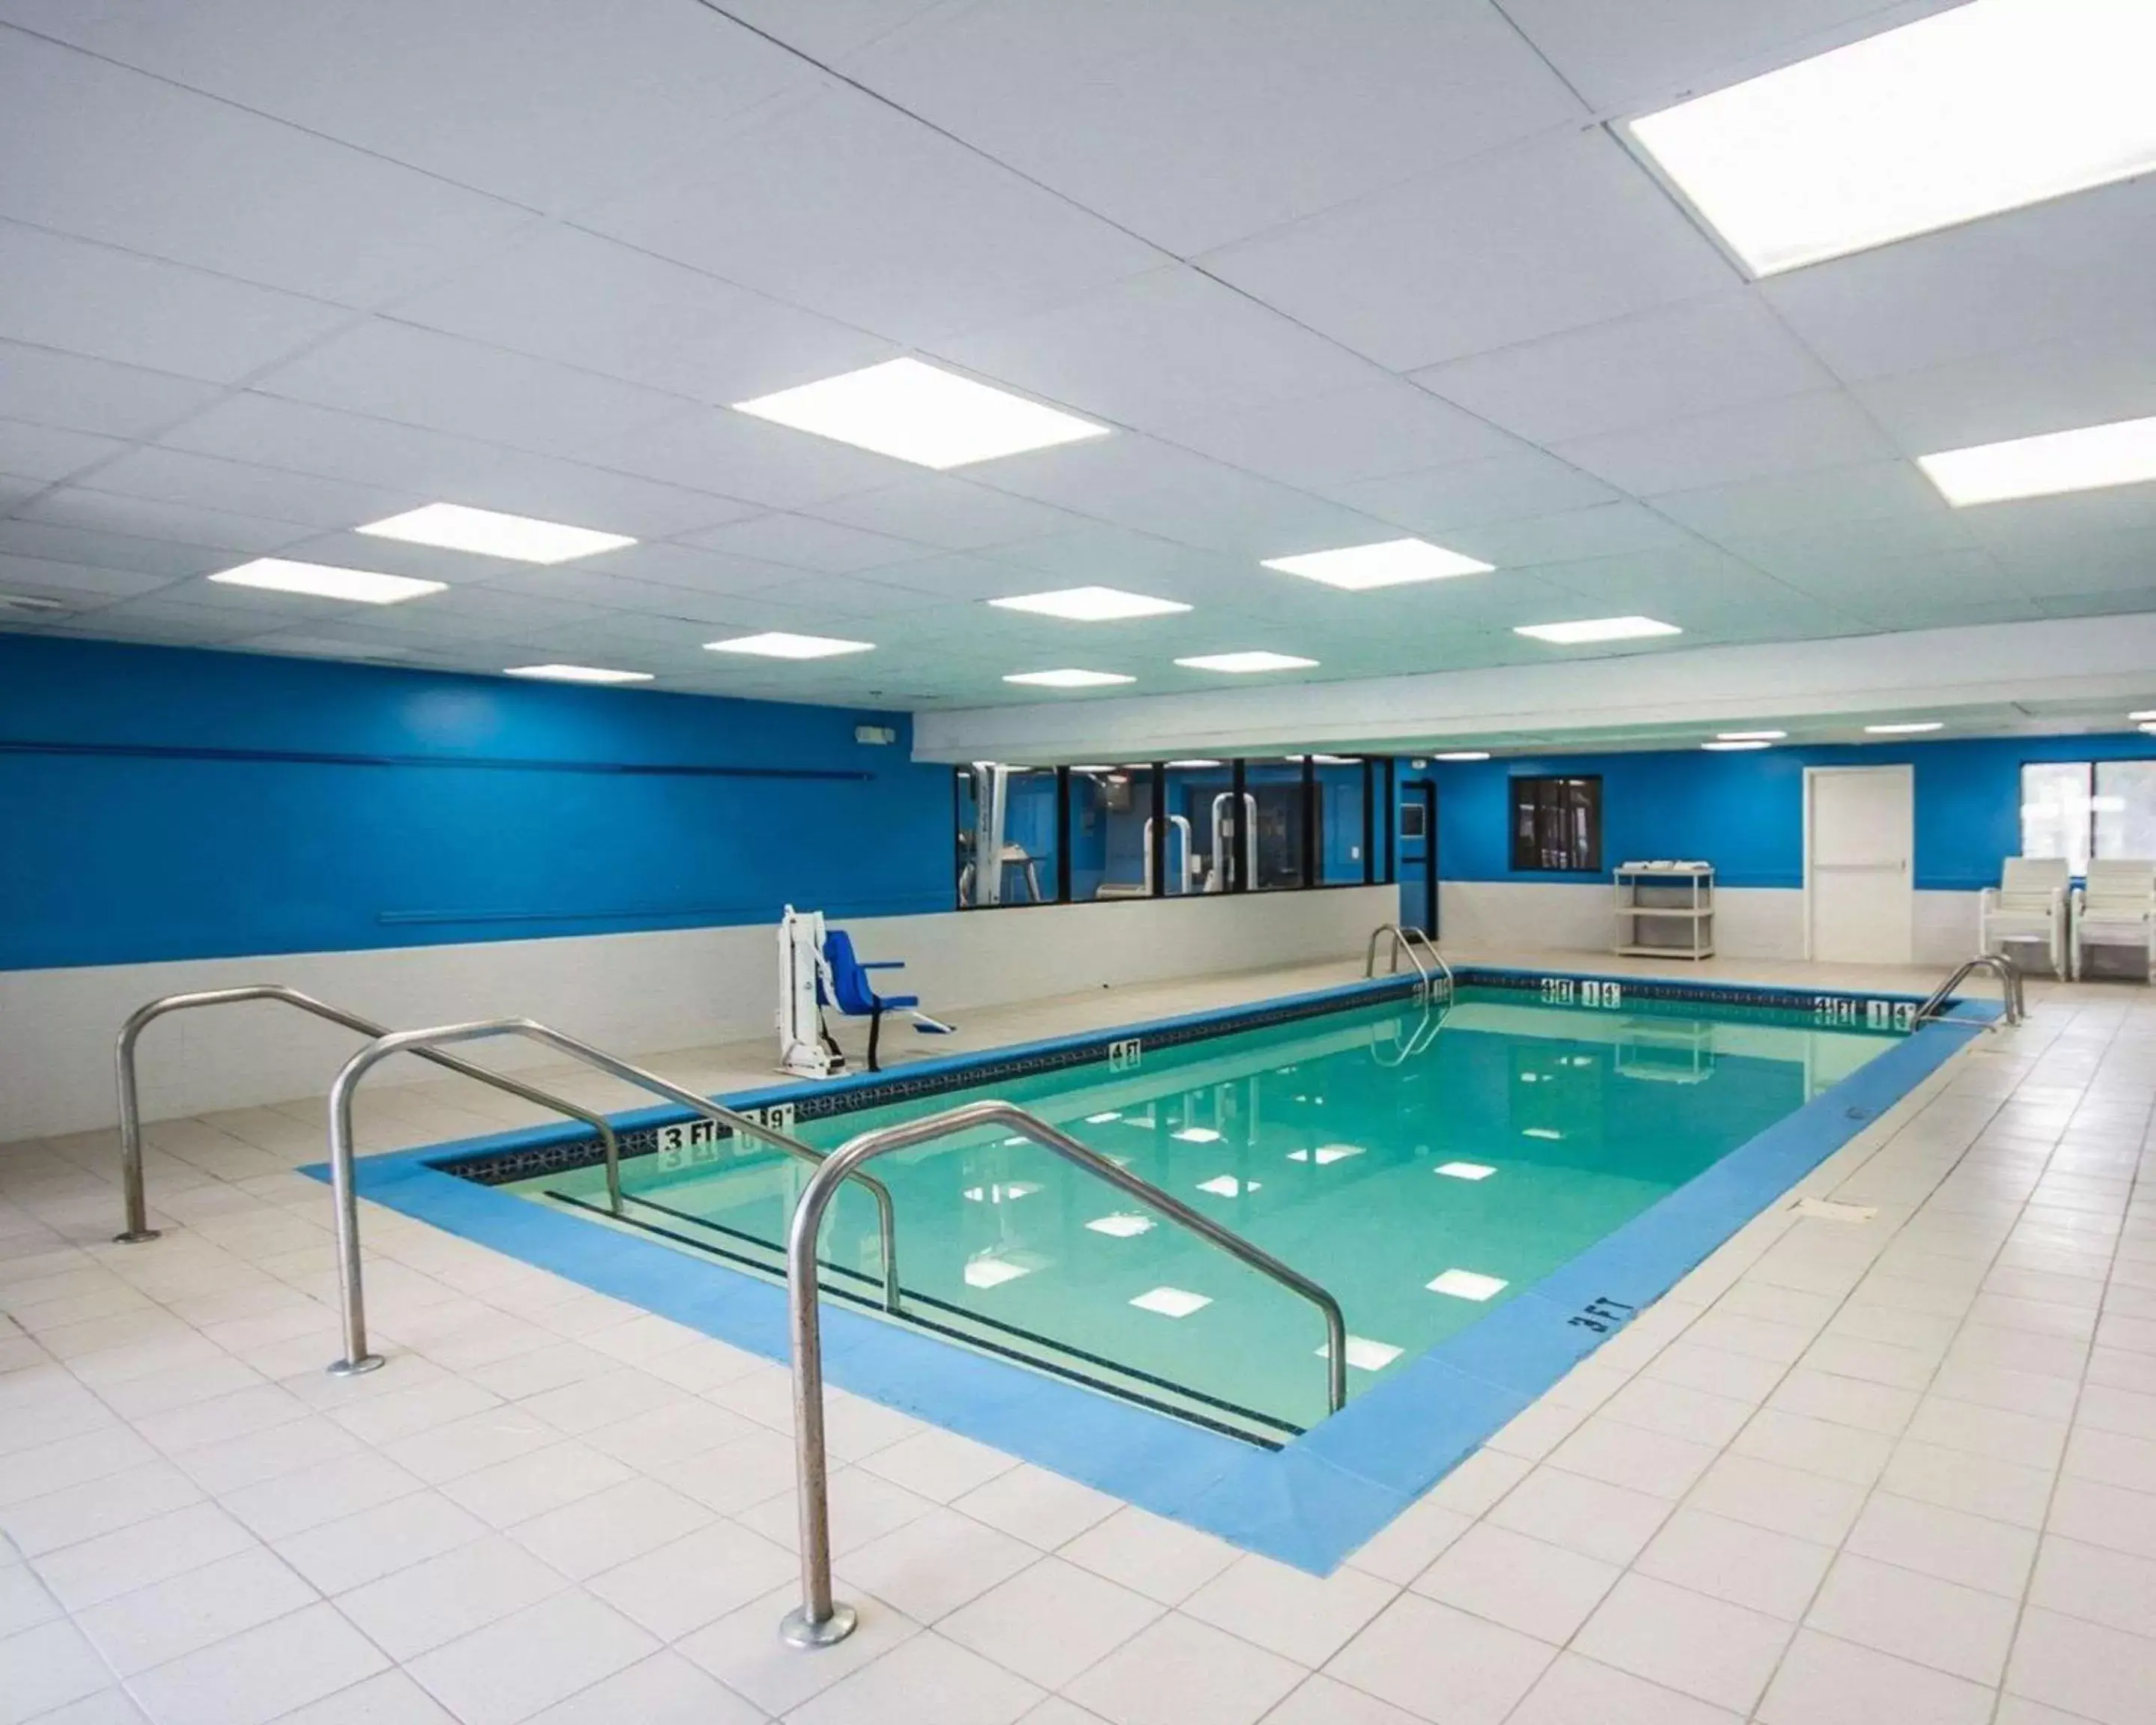 On site, Swimming Pool in Americas Best Value Inn Torrington, CT